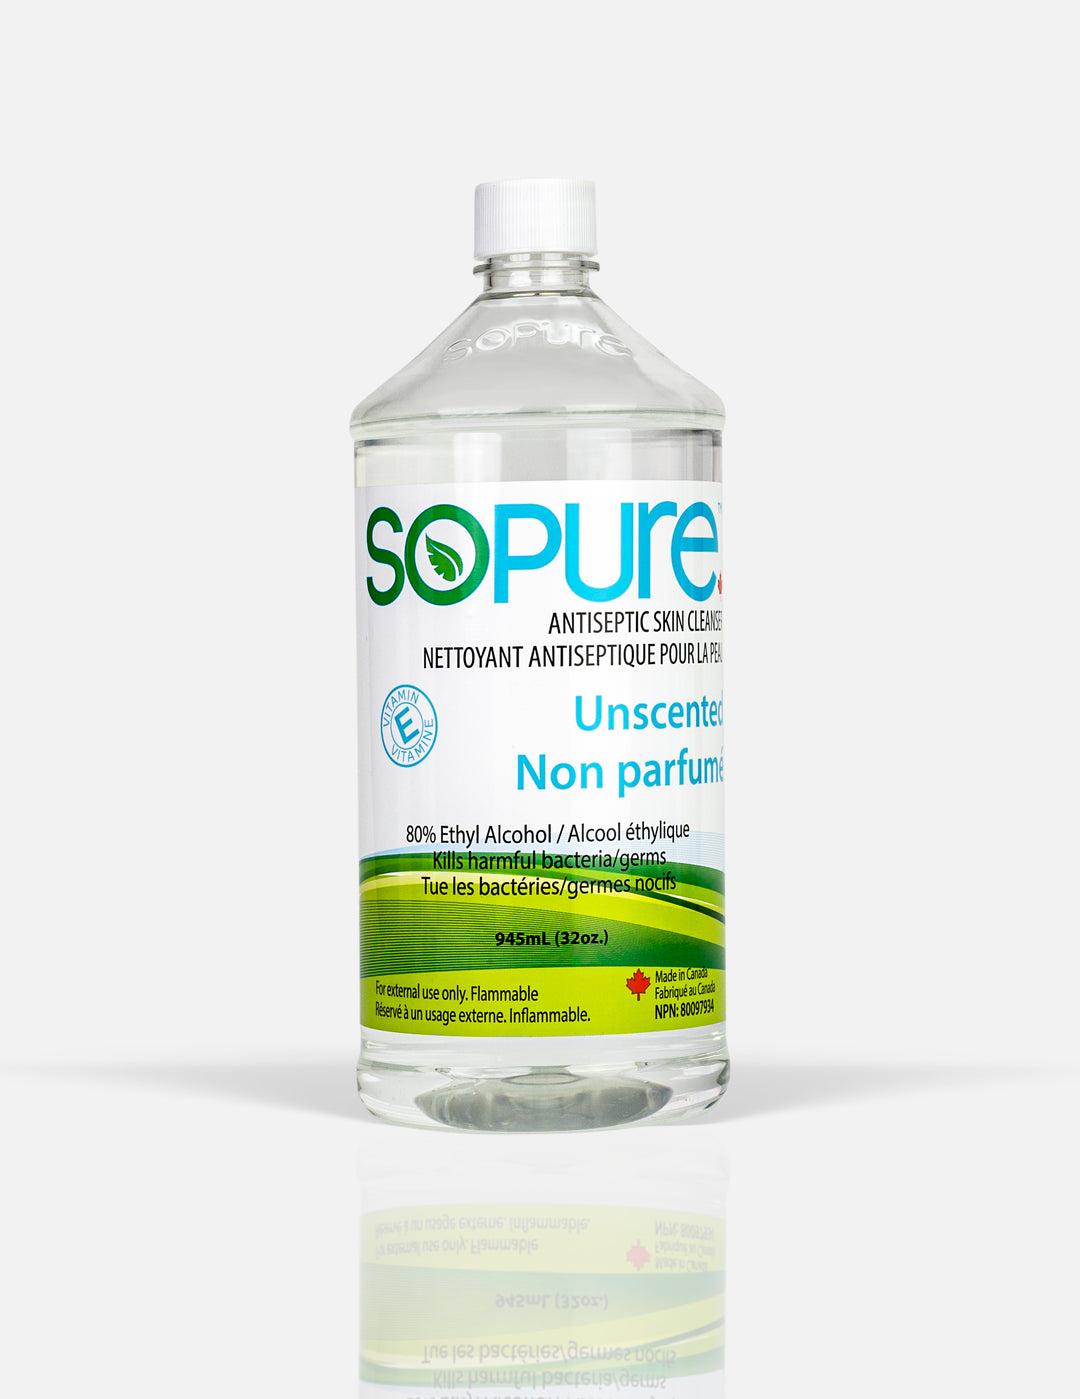 SoPure Sanitizer Refill Bottles 945 mL, 80% USP Grade Ethyl Alcohol: High-Standard Sanitization Meets Skin Care - SoPure Products